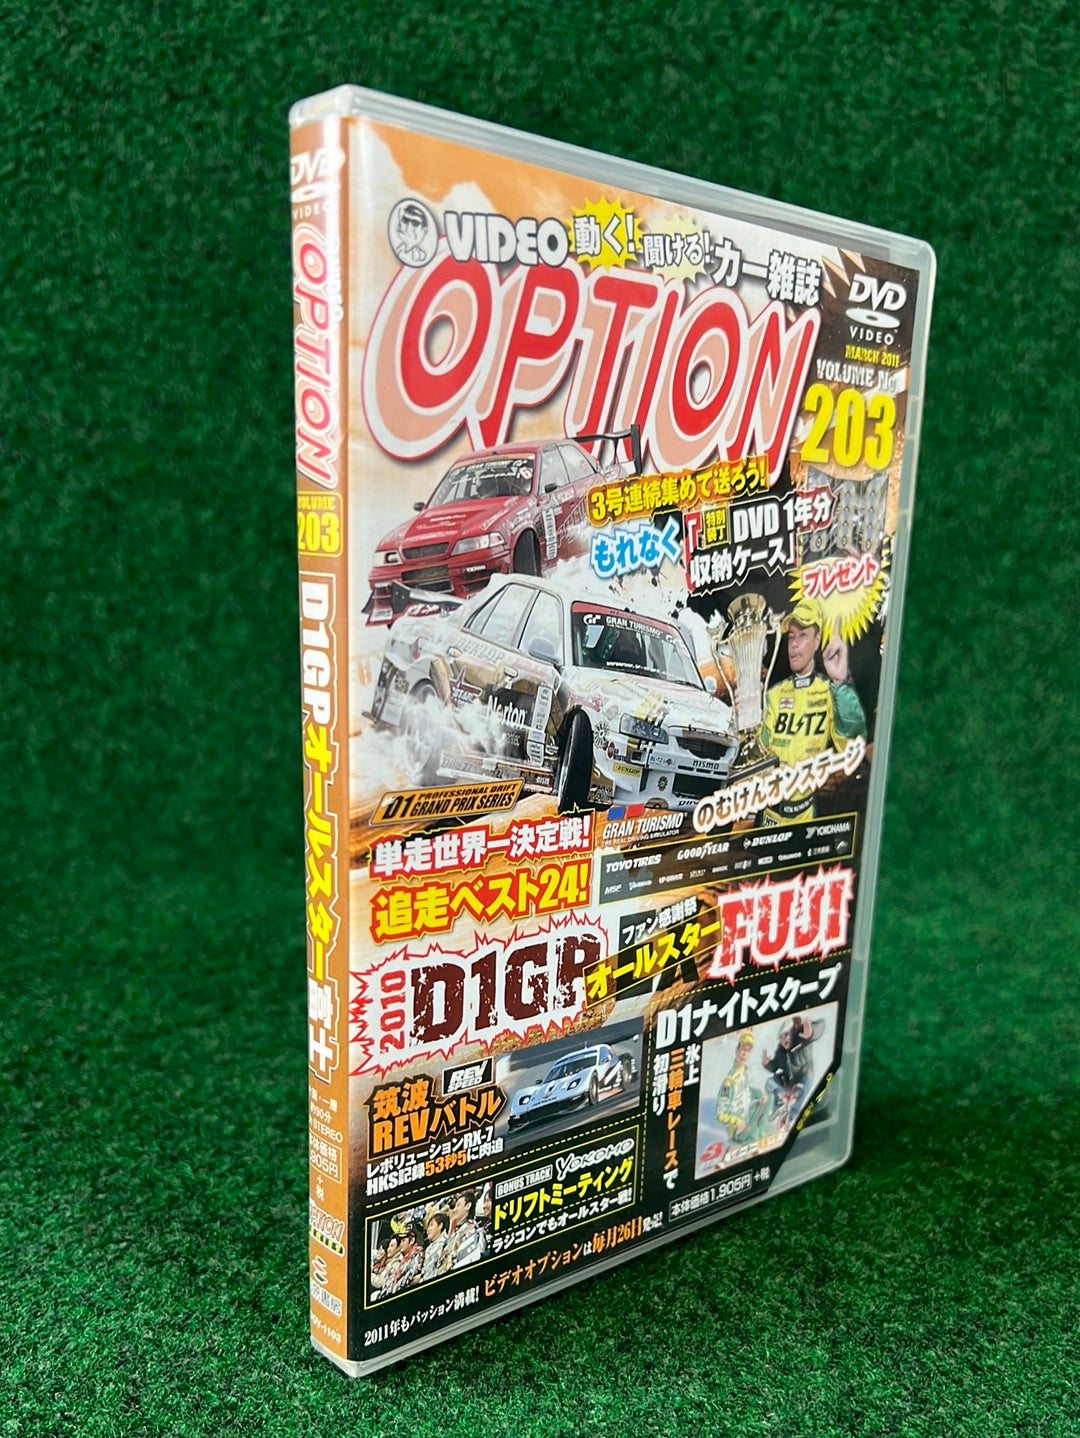 Option Video DVD -   March 2011 Vol. 203